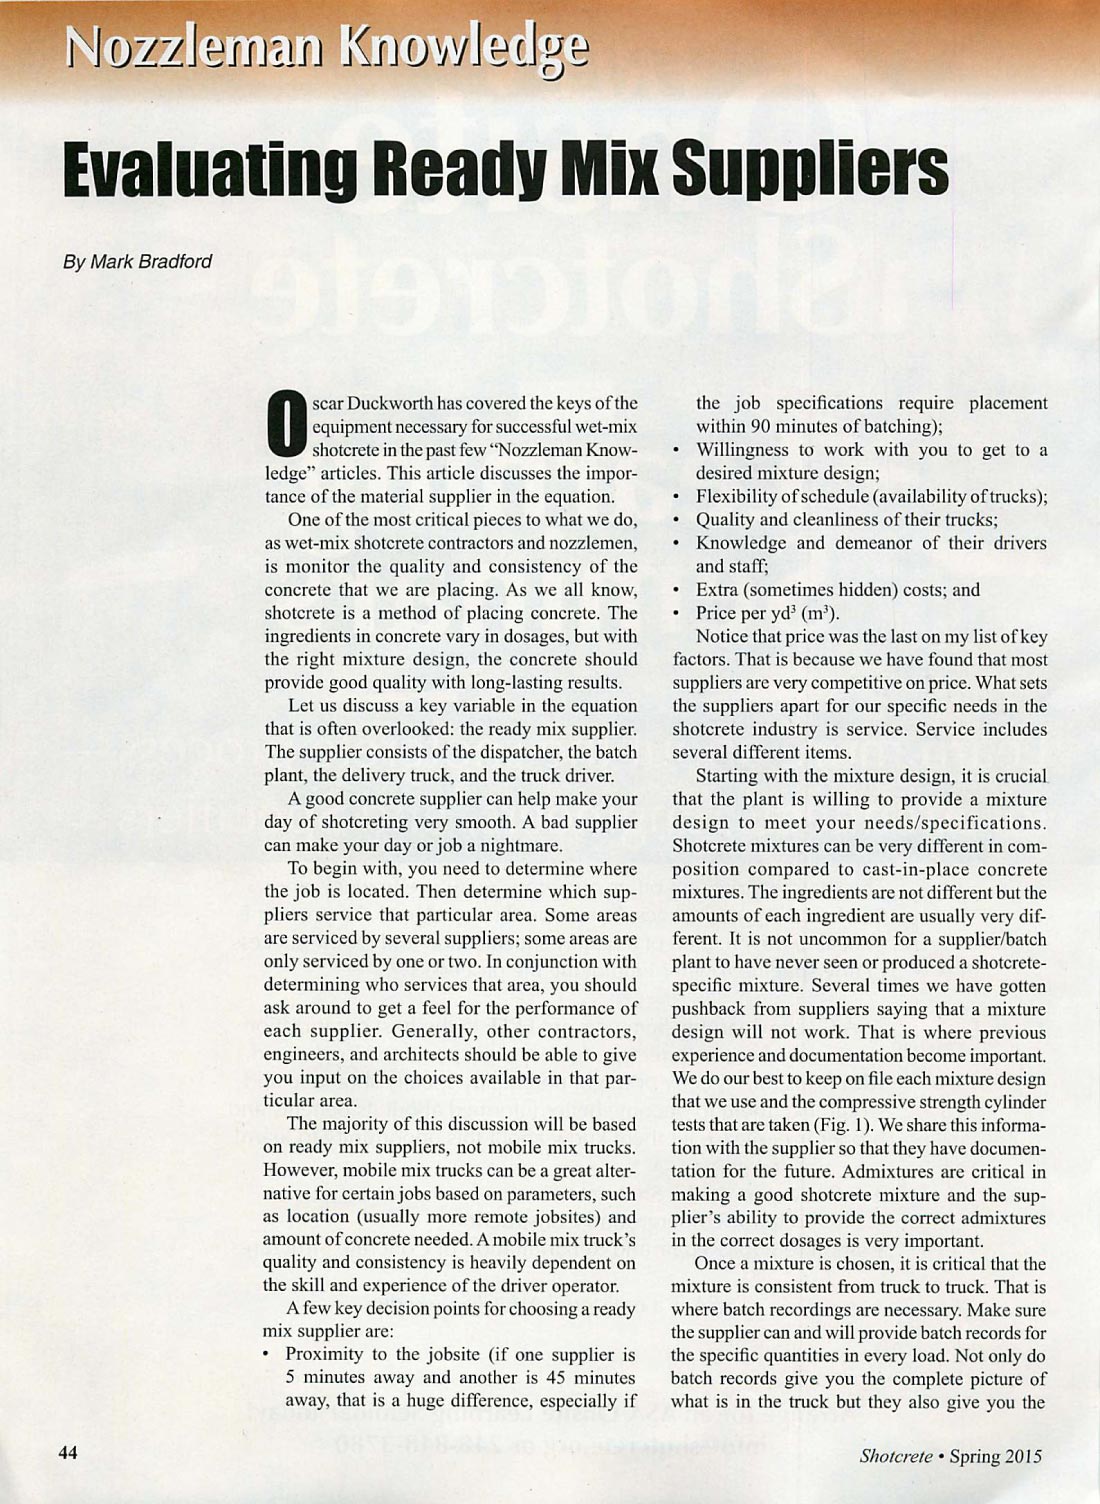 Shotcrete-Magazine-Article-Spring-2015-page2